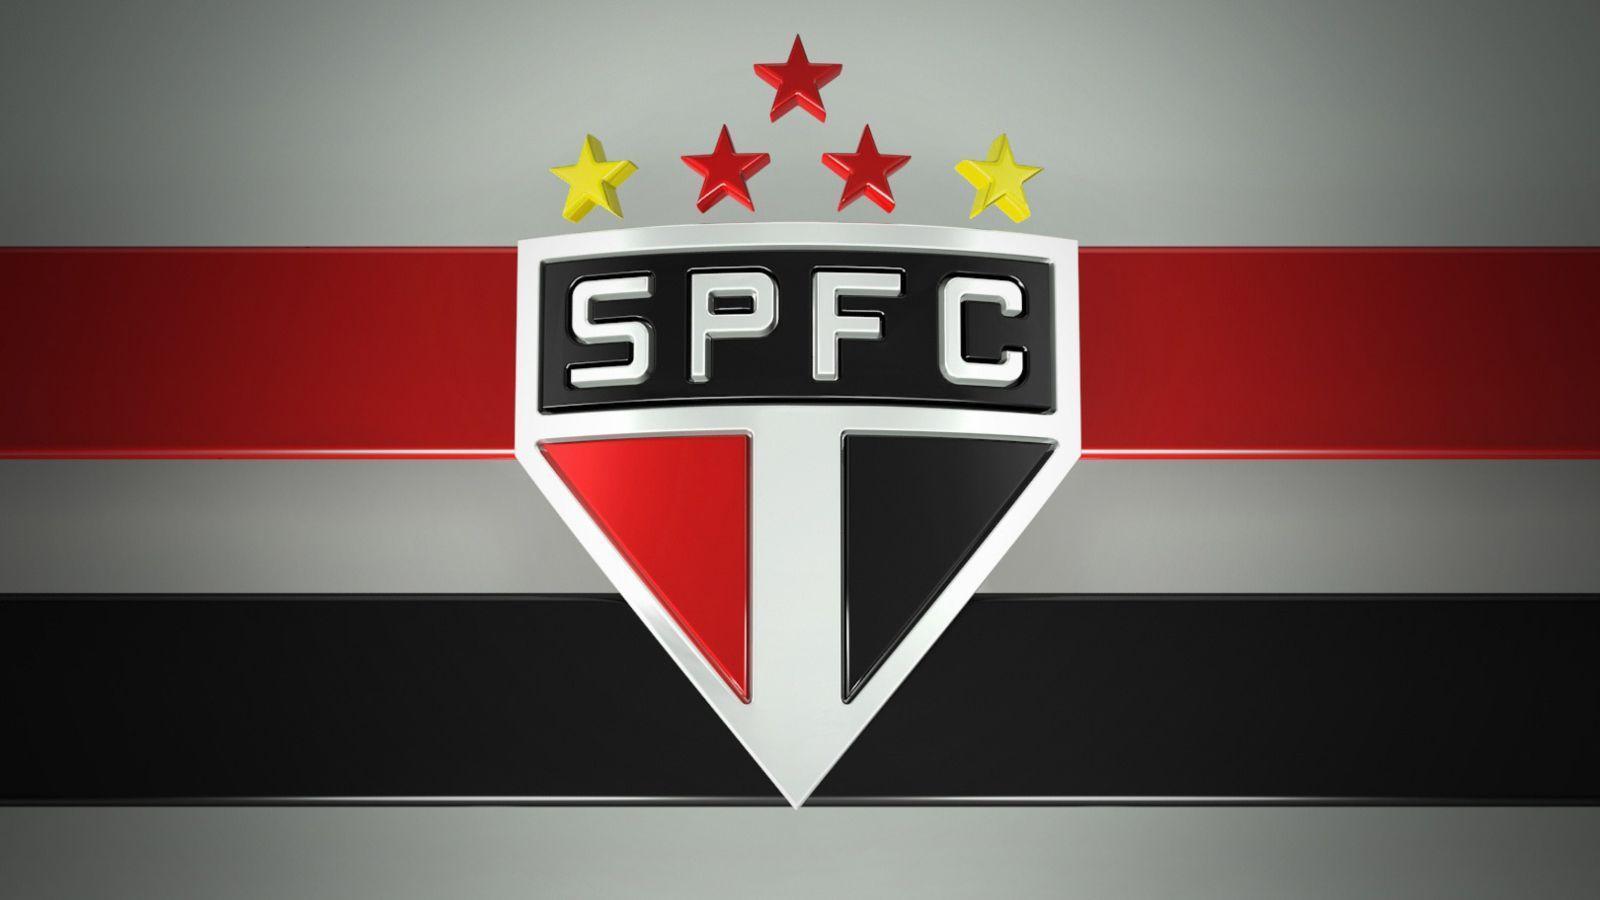 São Paulo FC Wallpapers - Wallpaper Cave